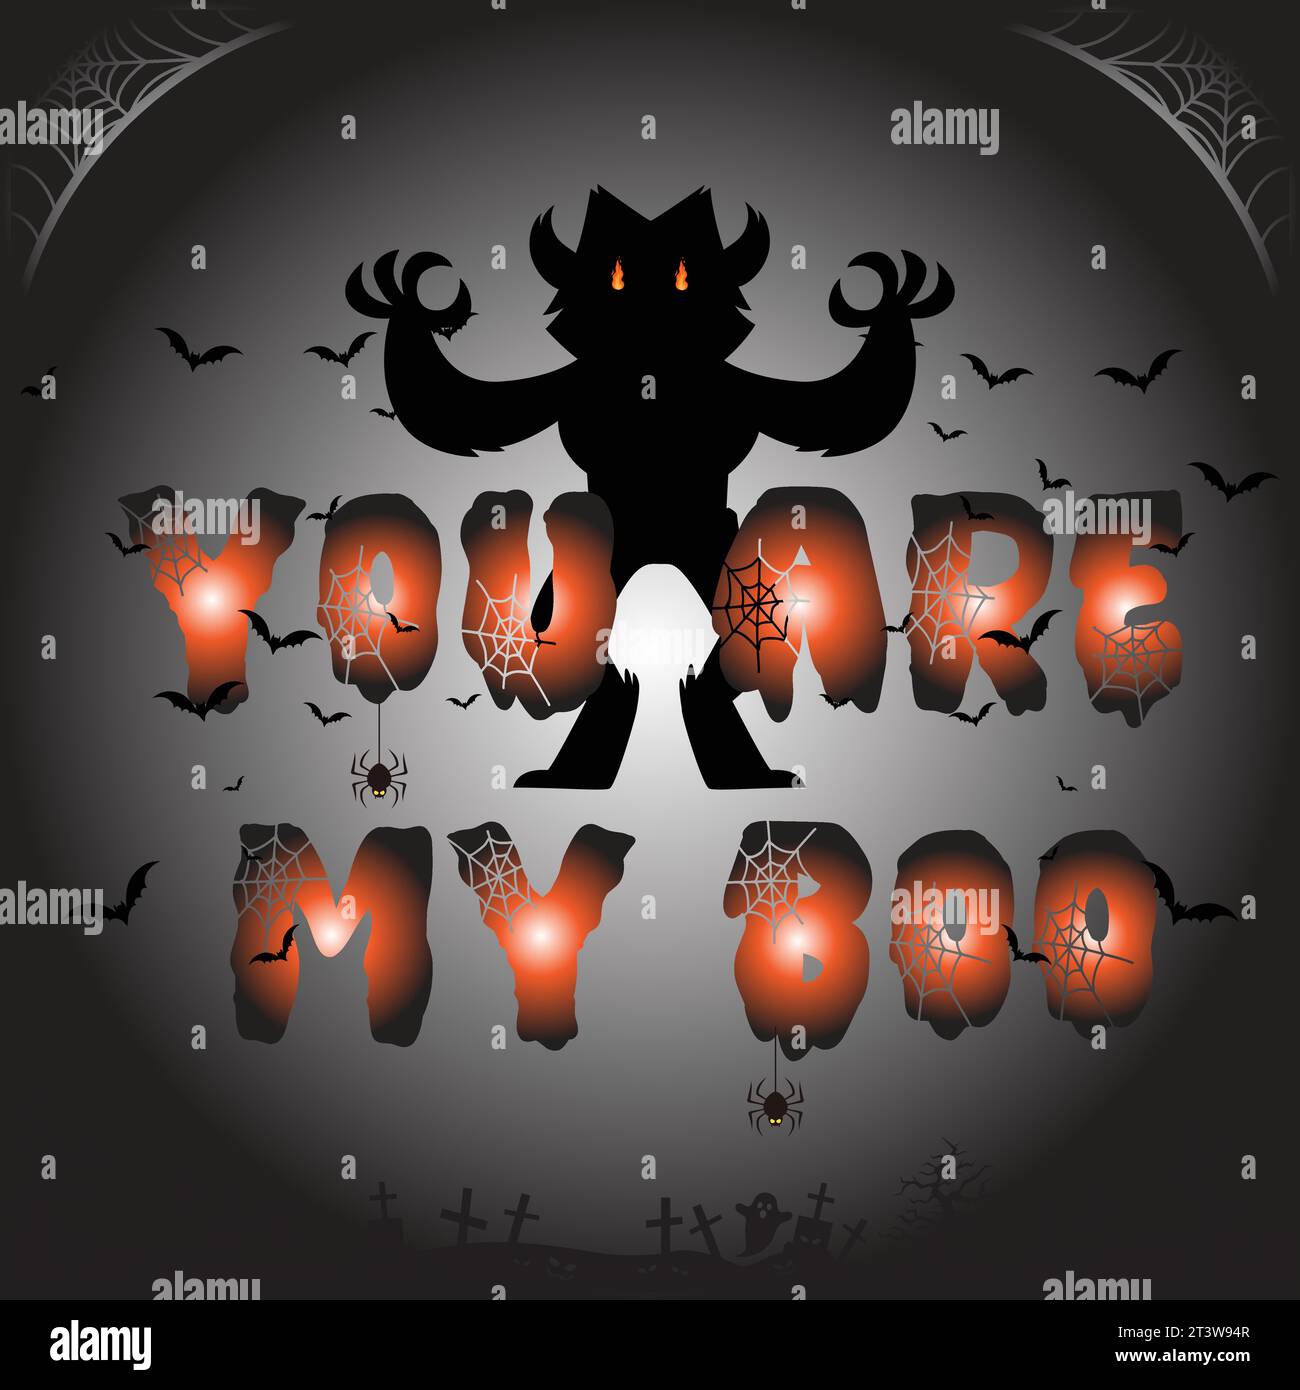 The Halloween Horror Witch Design with Bats Illustrazione Vettoriale